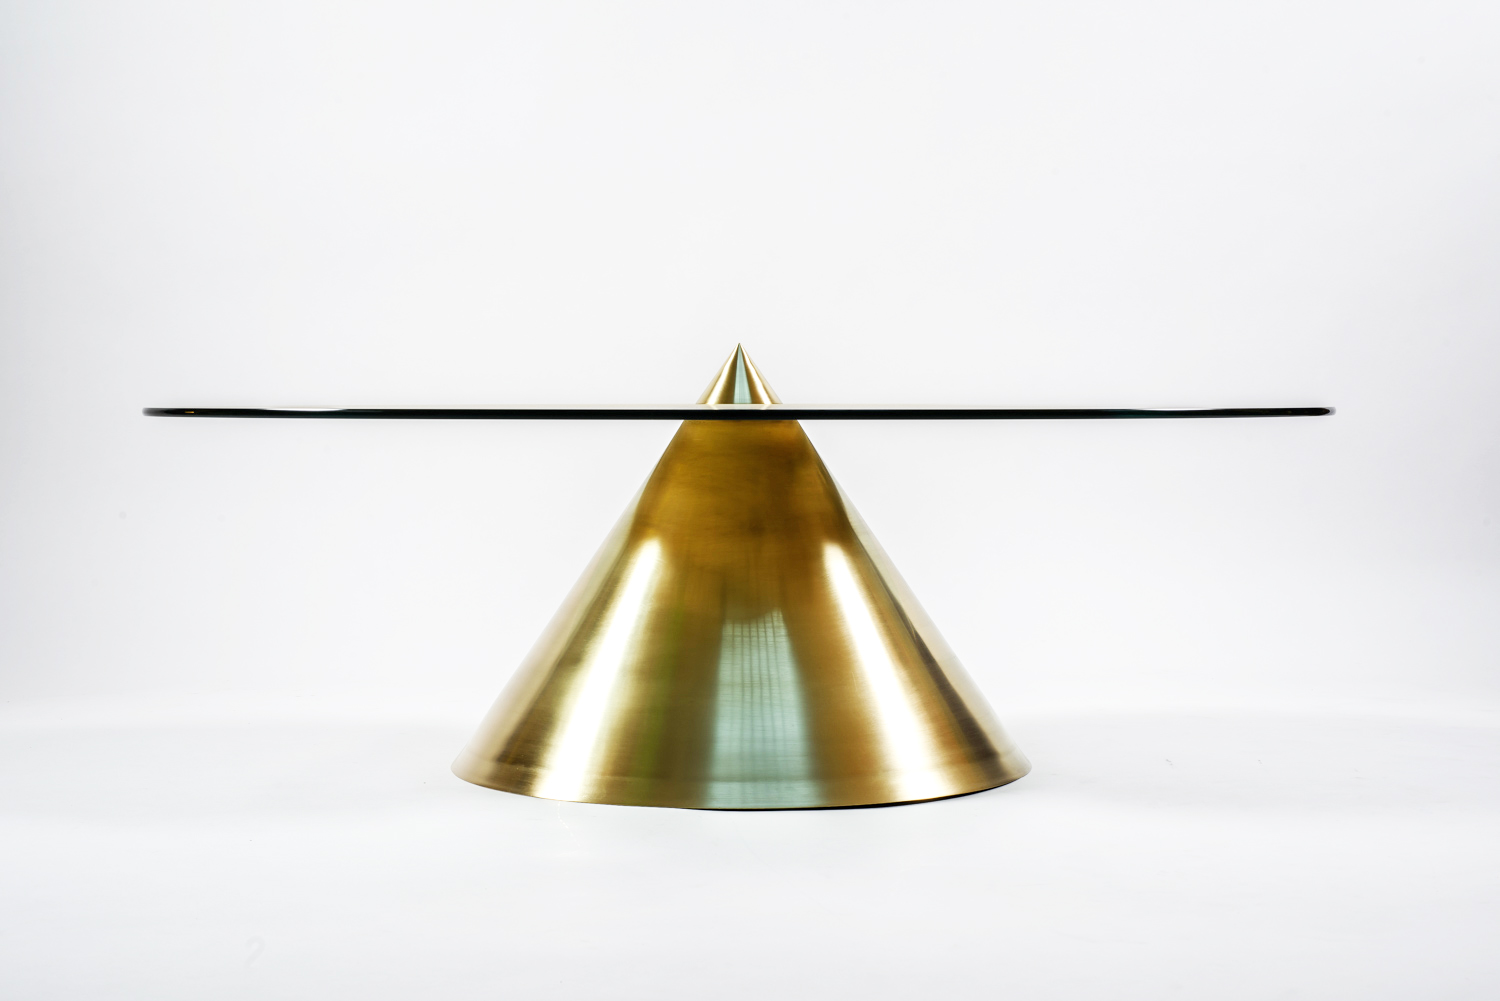  Brass plated steel  Tempered glass 52”&nbsp;x 16” H x 26”  